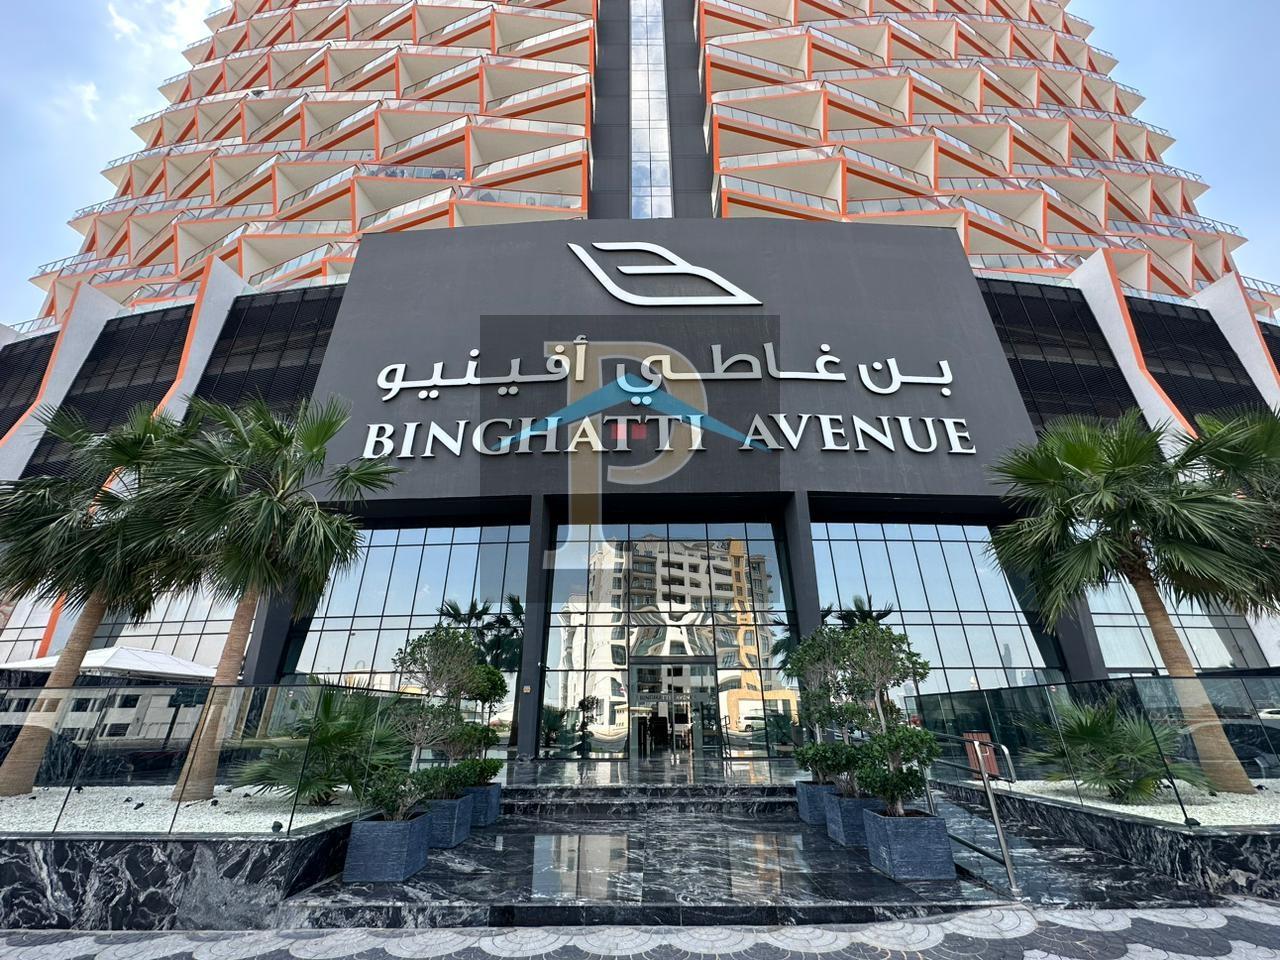 3 bed, 3 bath Apartment for sale in Binghatti Avenue, Al Jaddaf, Dubai for price AED 1450000 